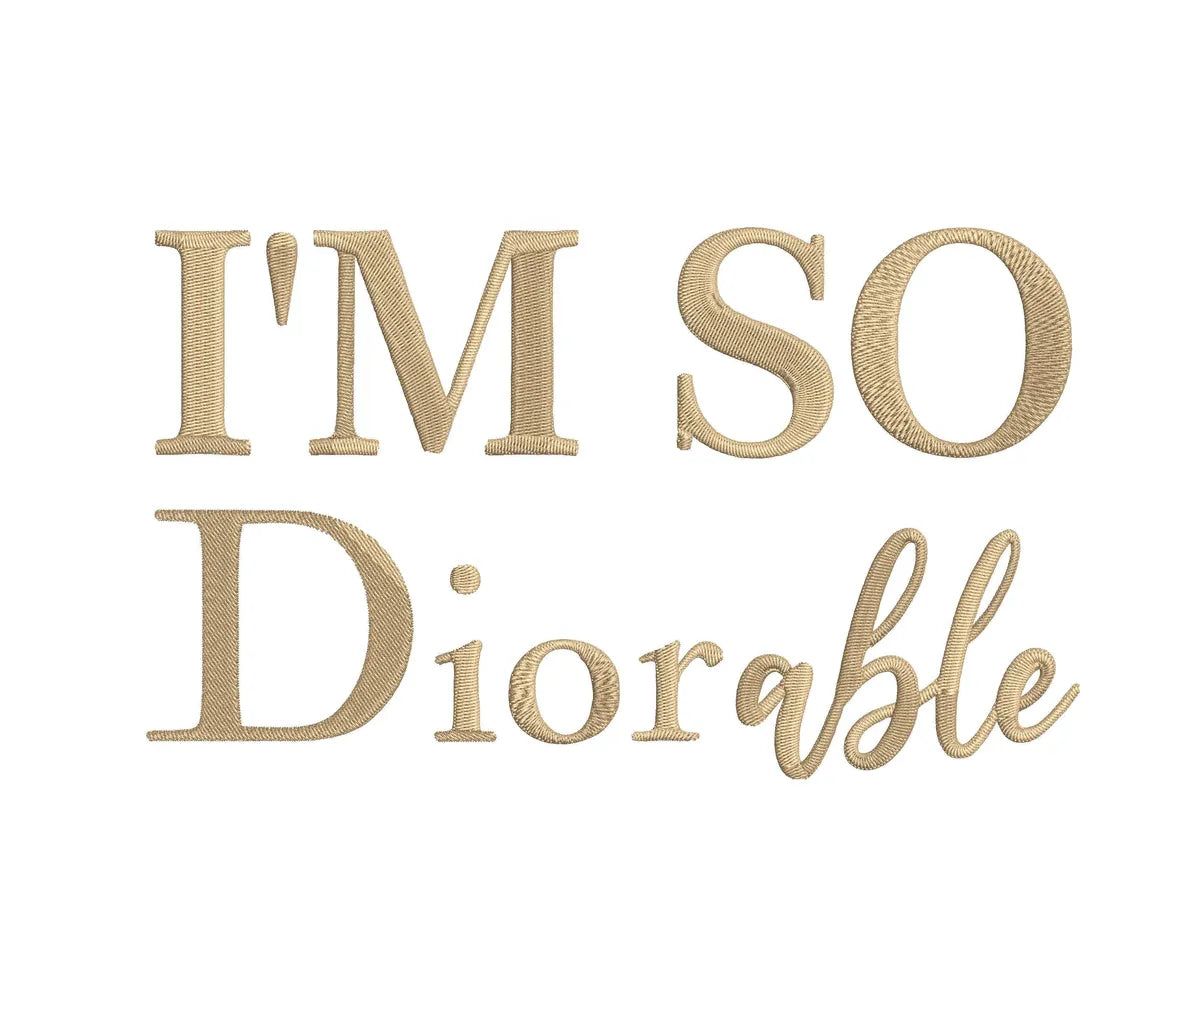 I'm So Dior-able - Embroidery Design - FineryEmbroidery